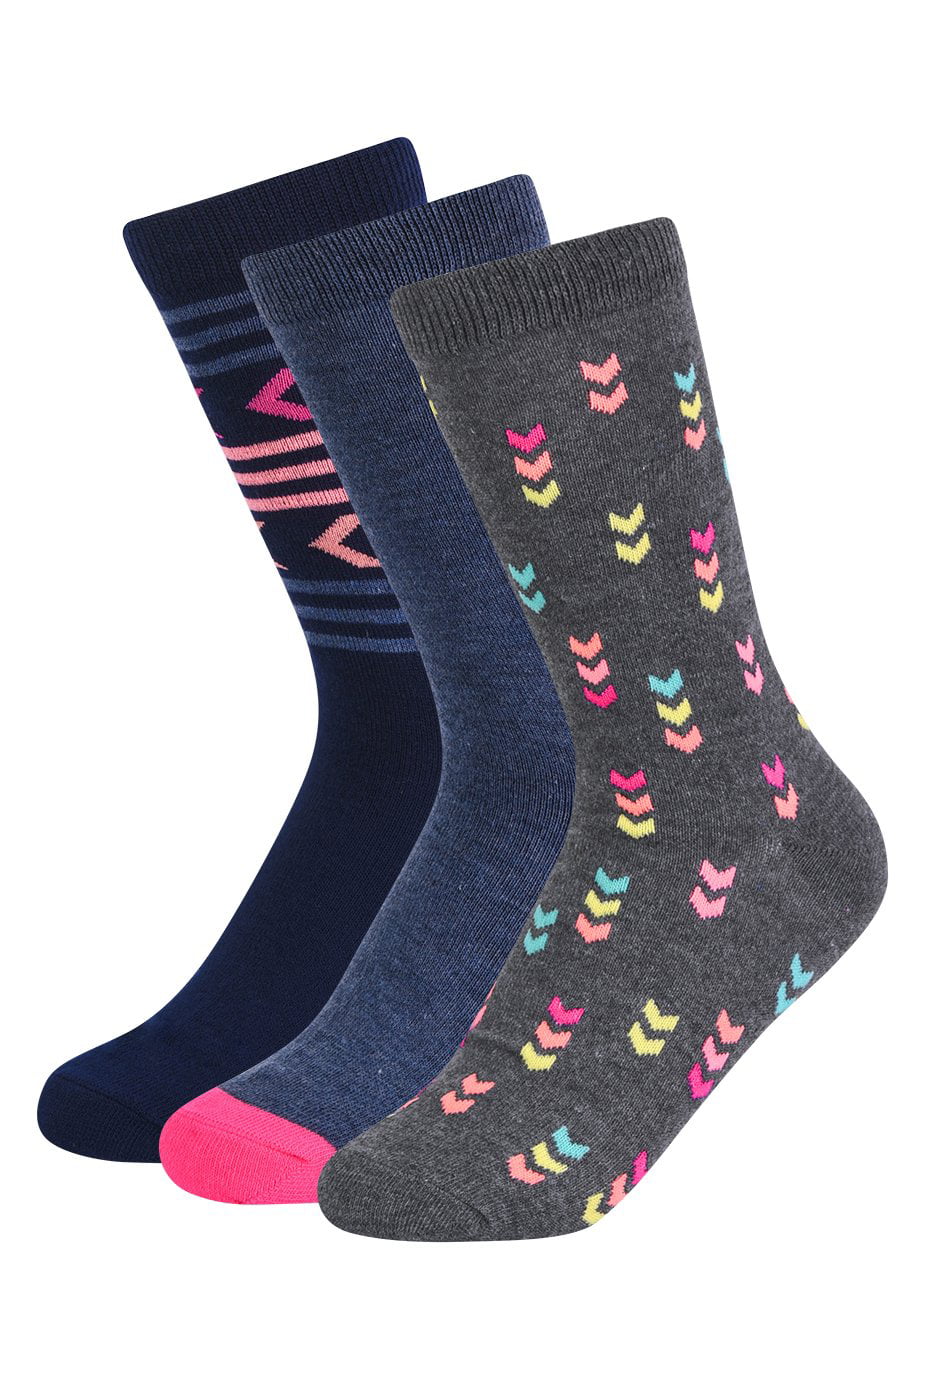 3 Pairs of Women's Premium Fashion Crew Socks (Arrow)